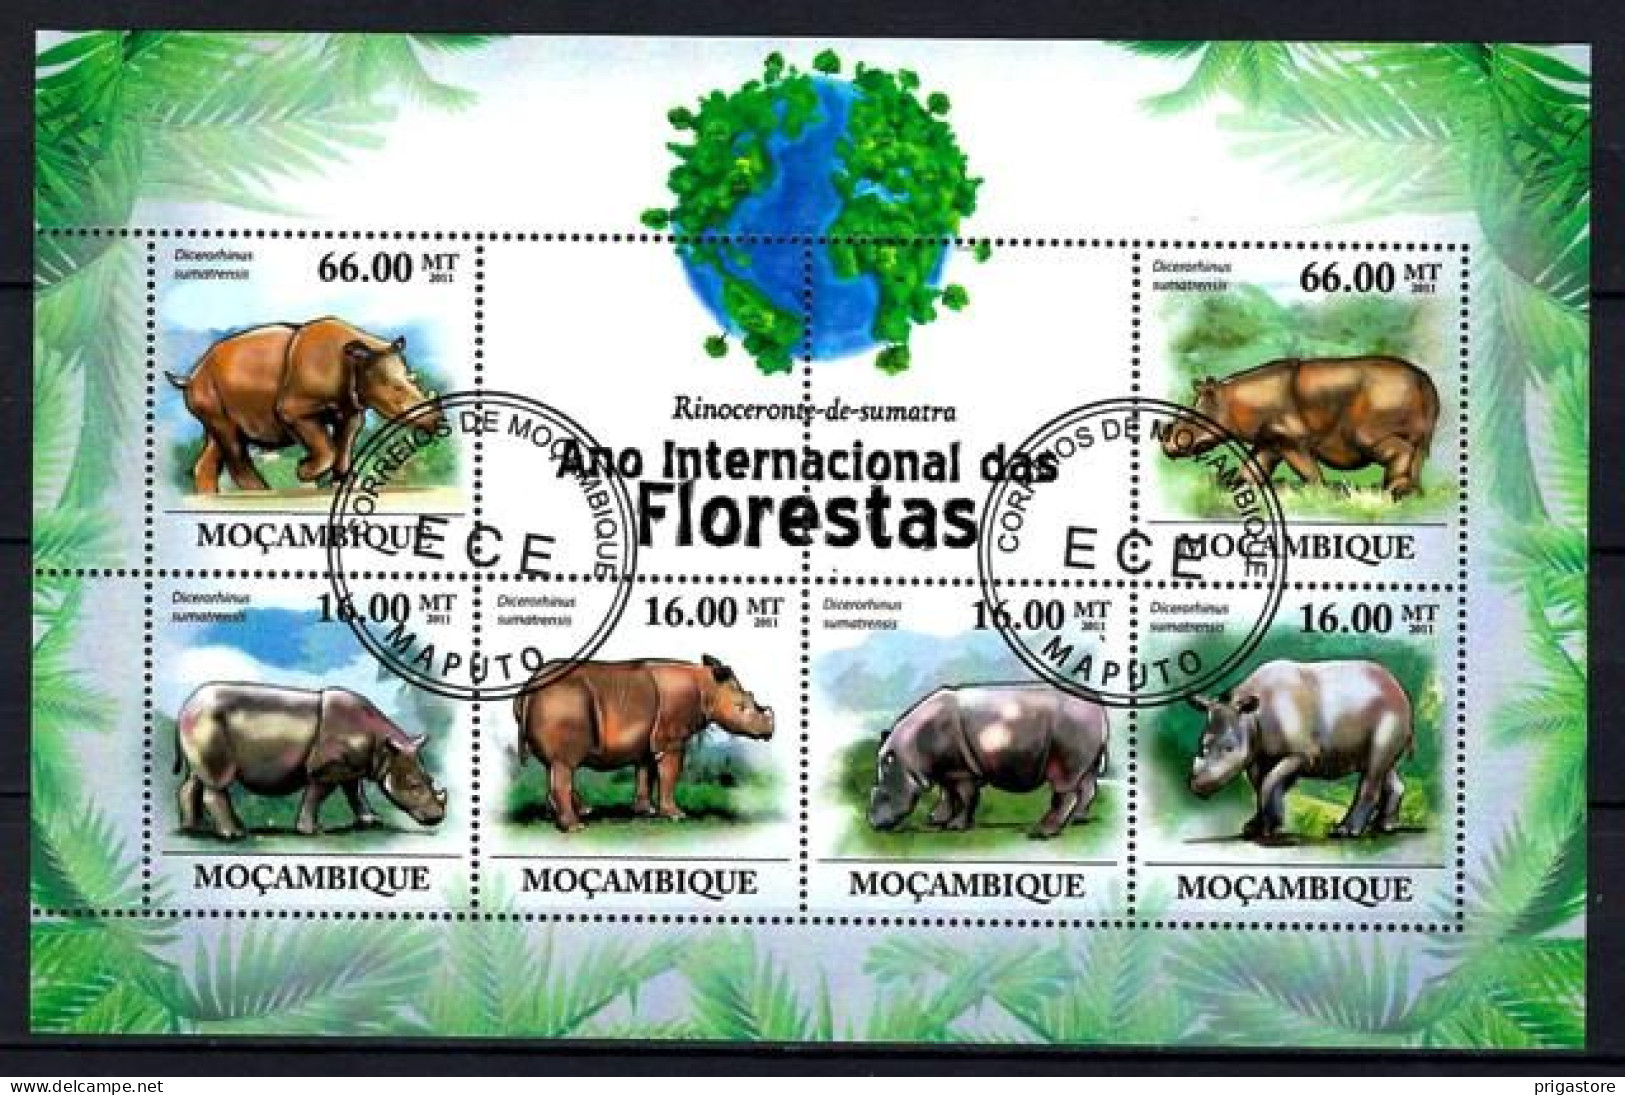 Animaux Rhinocéros Mozambique 2011 (330) Yvert N° 3556 à 3561 Oblitérés Used - Rhinozerosse